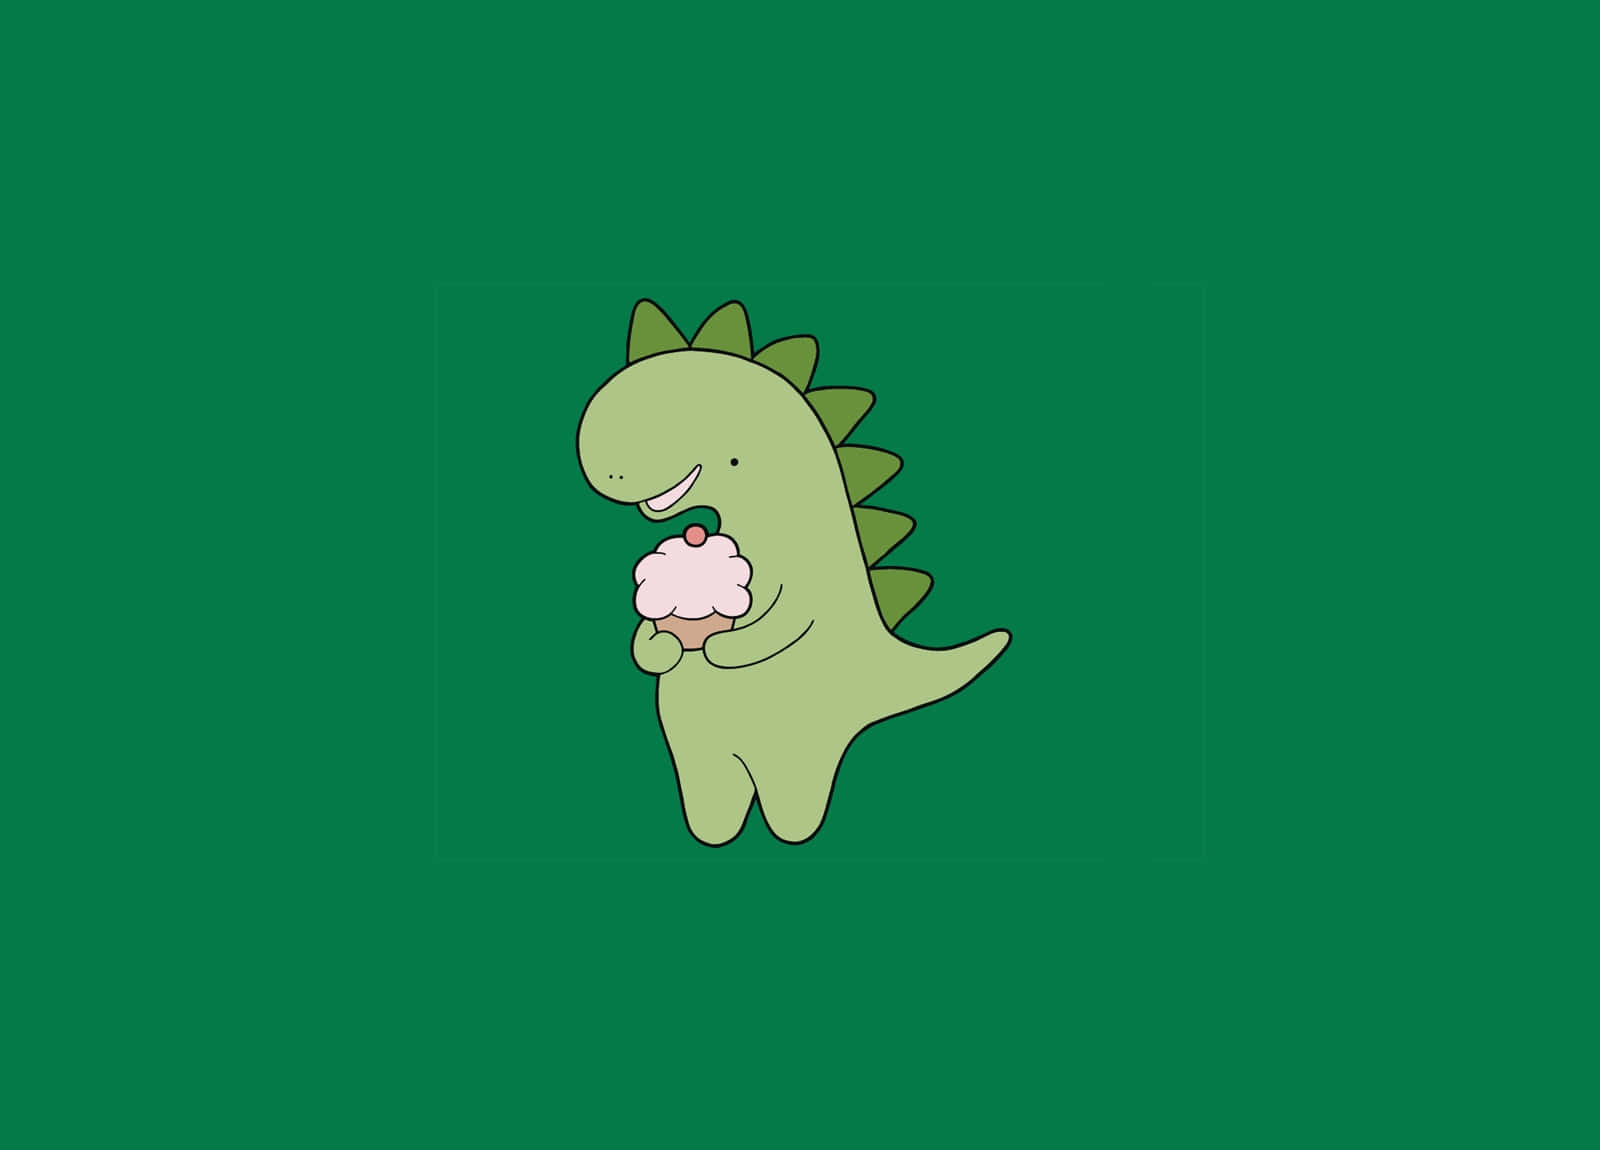 Cute Green Dinosaur in a Playful Mood Wallpaper